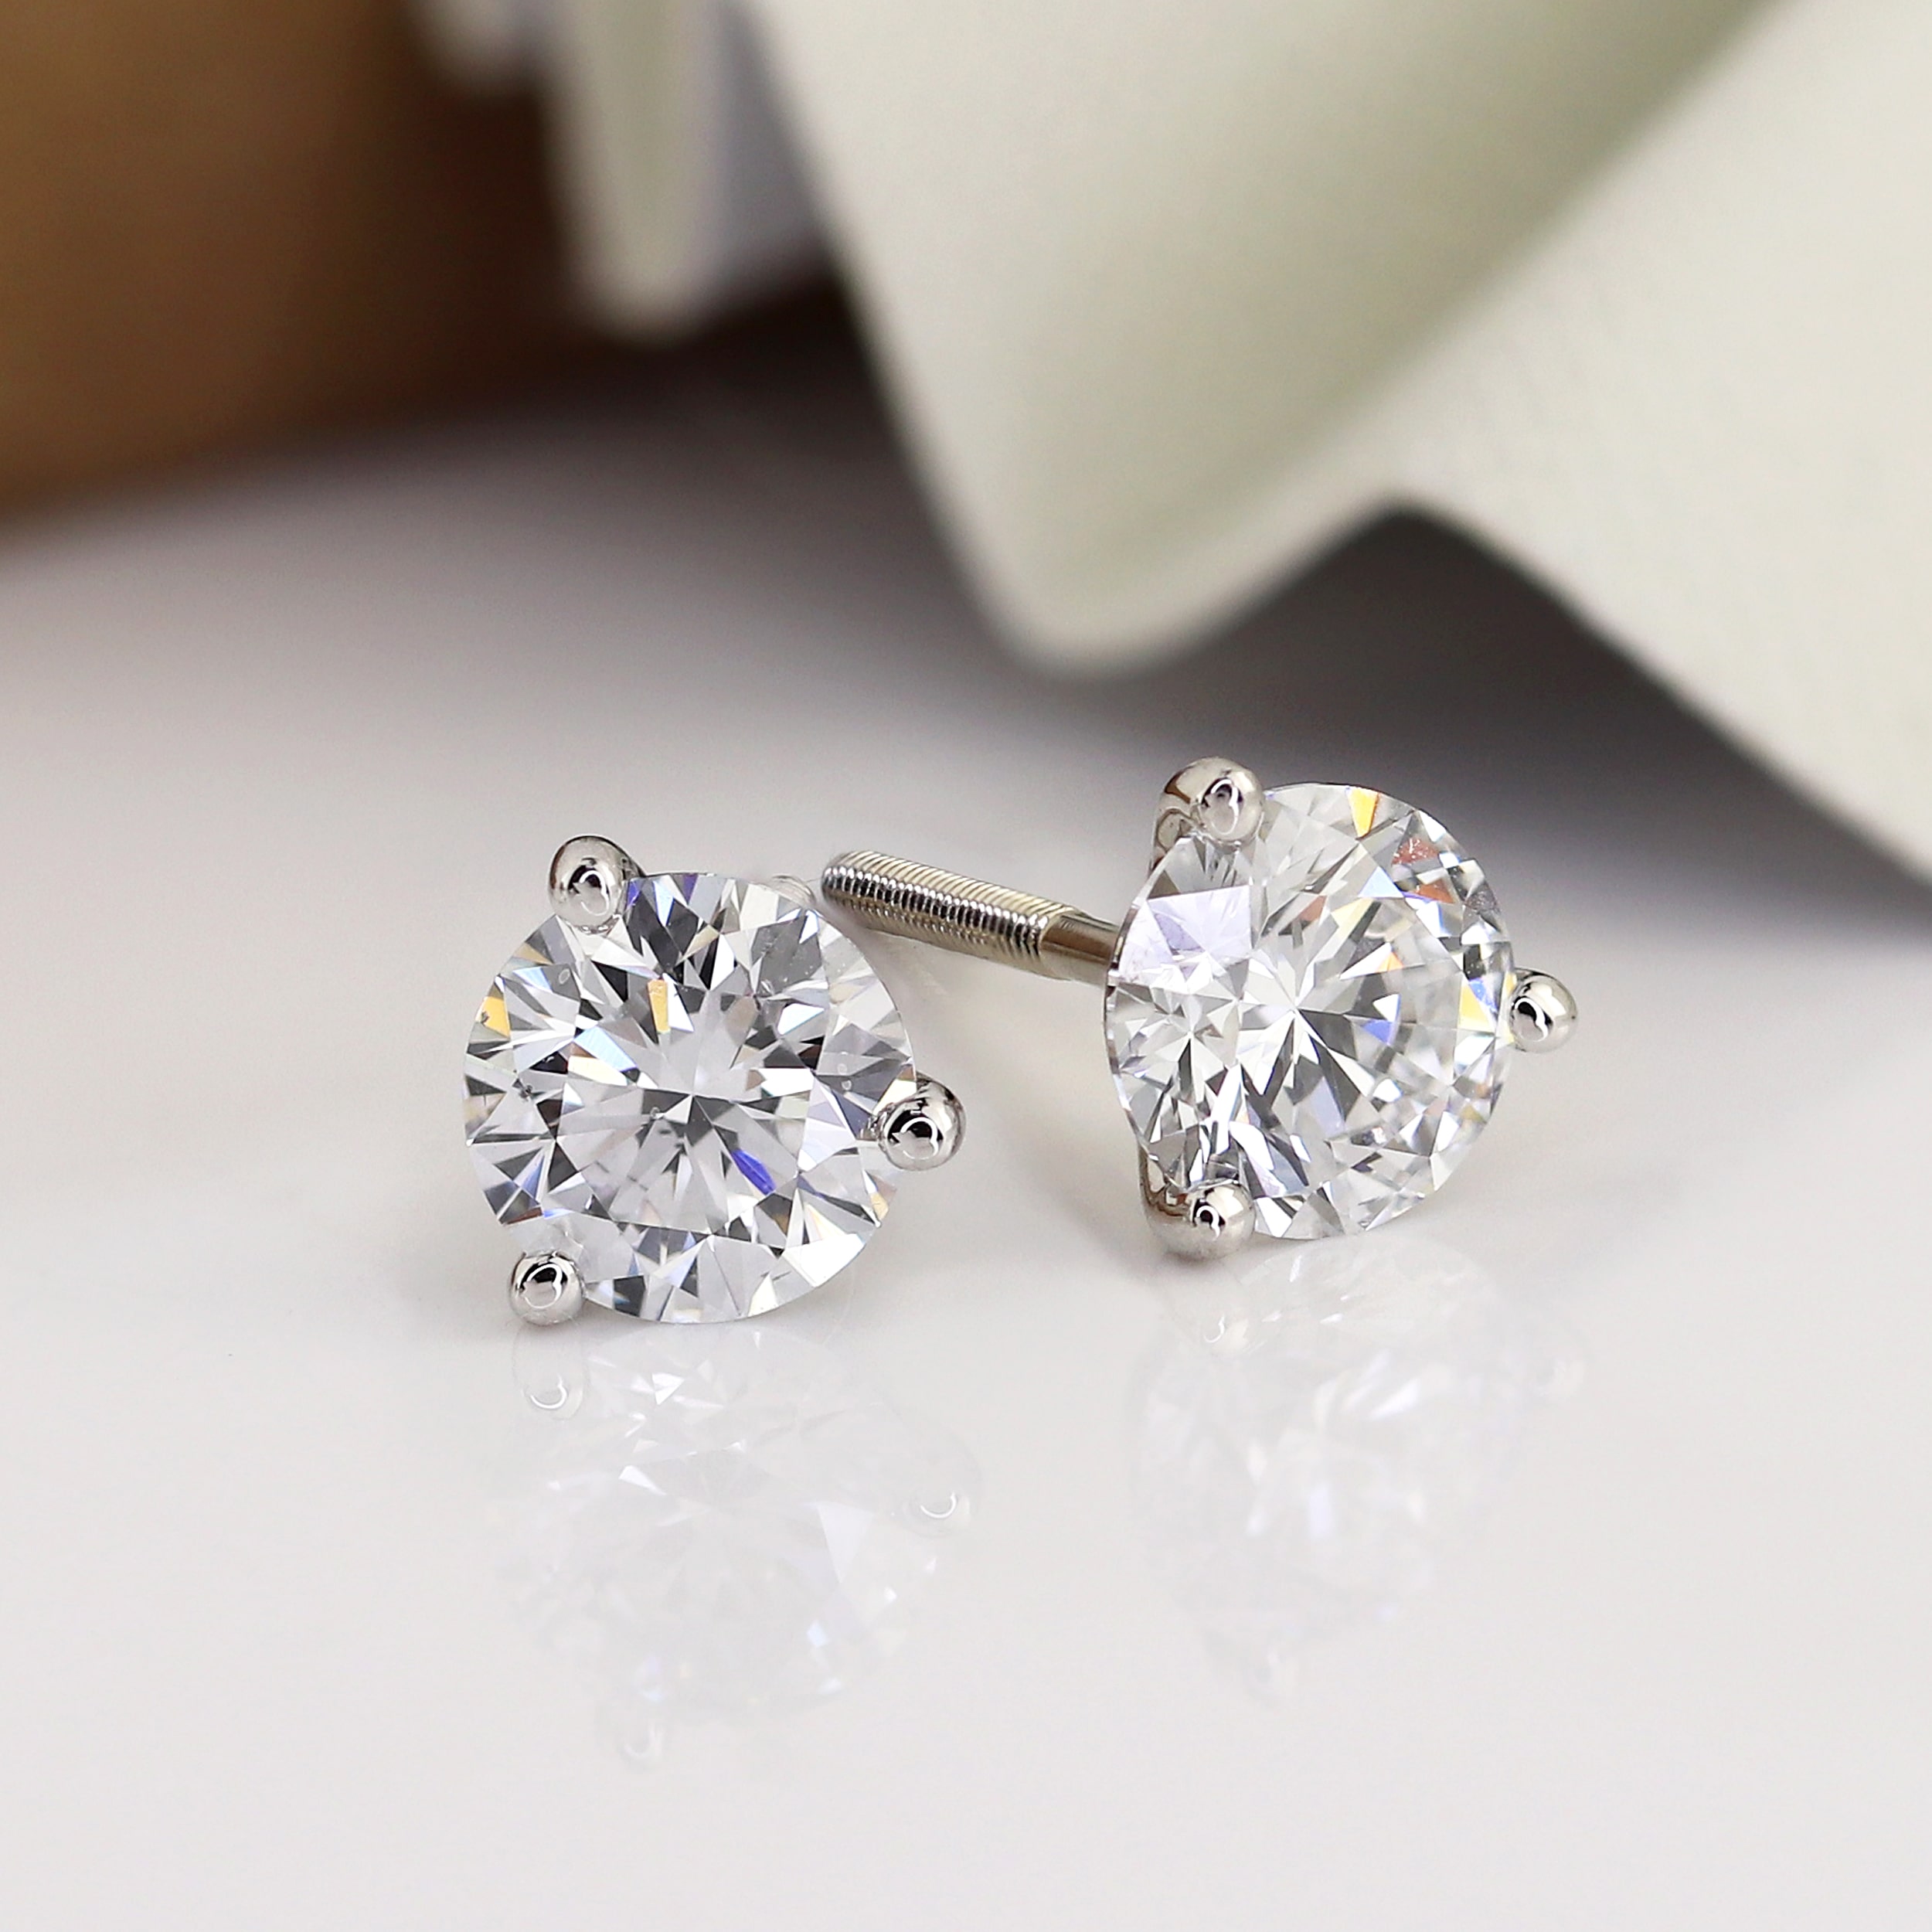 https://www.diamondstuds.com/images/prong-martini-stud-solitaire-earrings.jpg